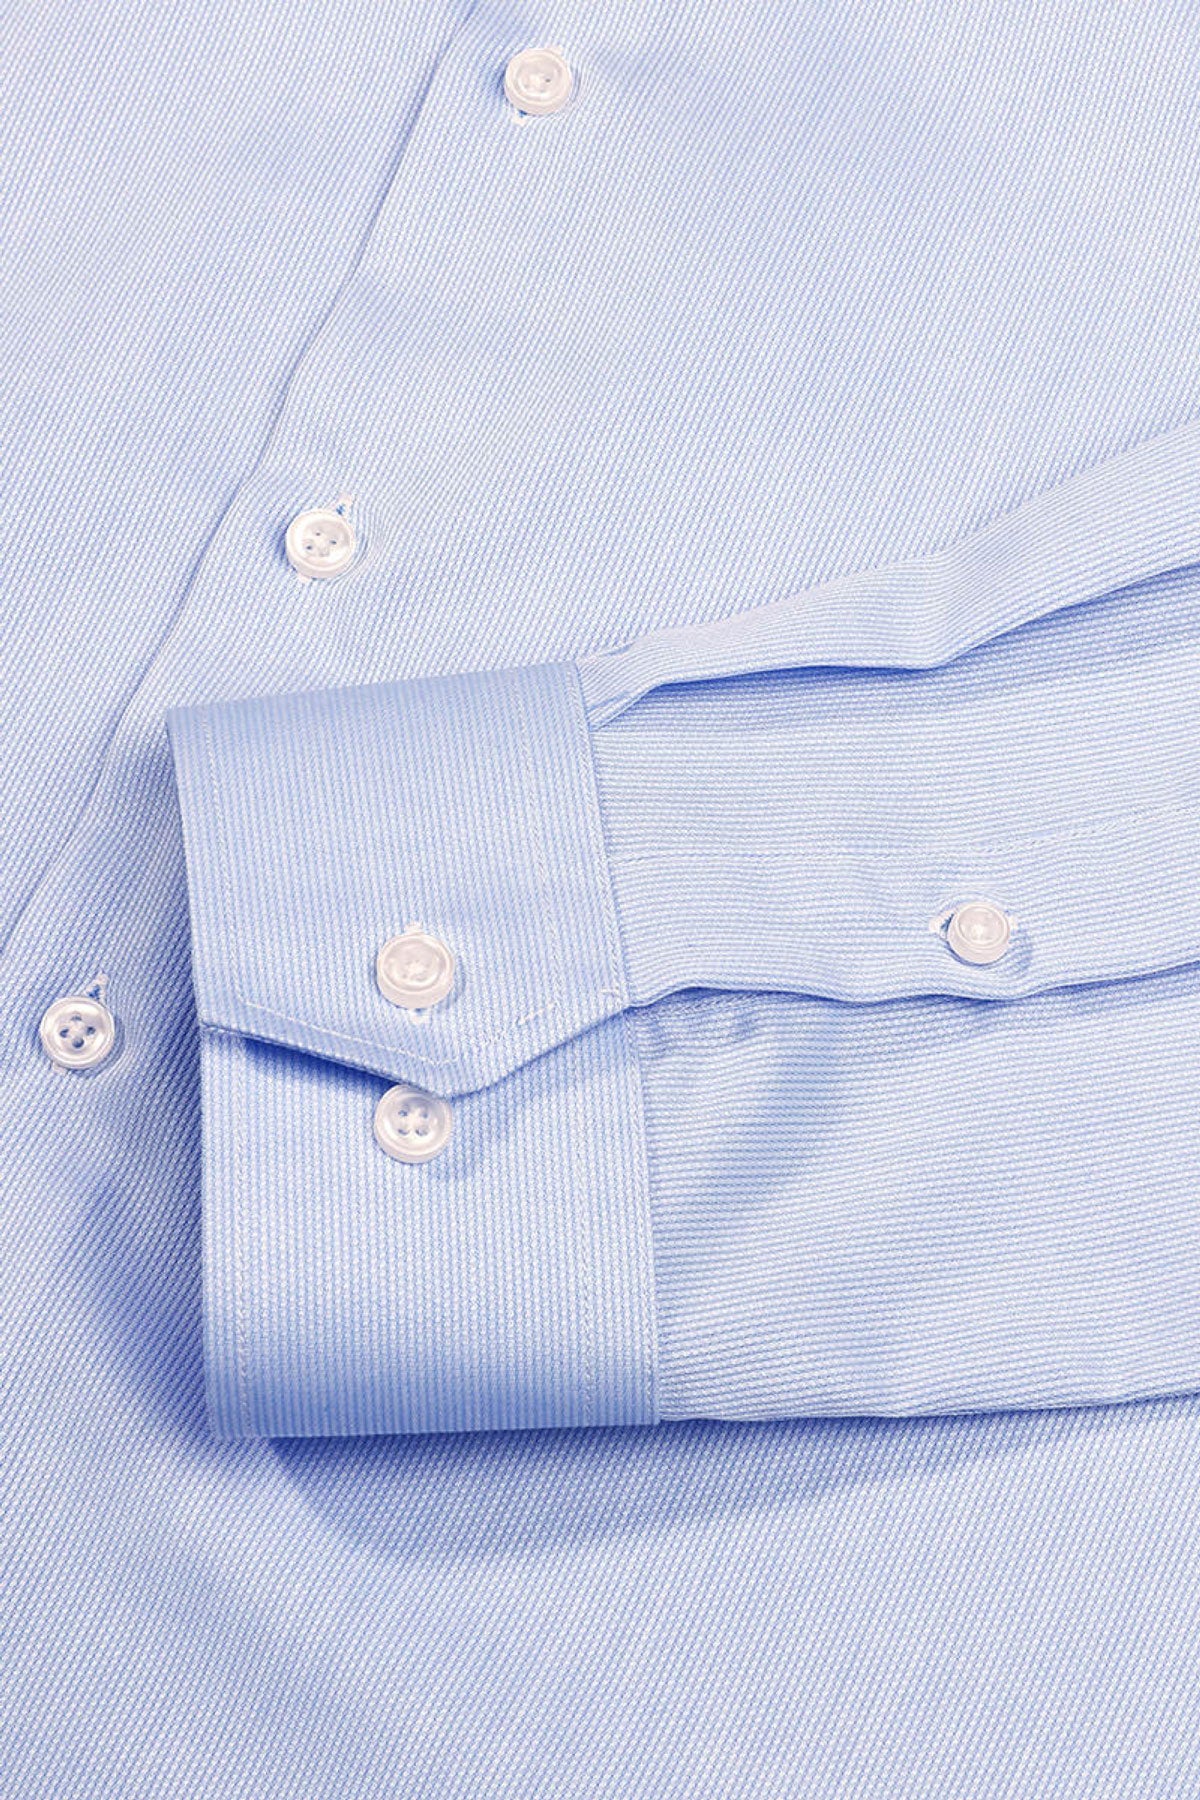 Strijkvrij Overhemd - Lichtblauw Jacquard - Overhemd - Vercate - Vercate - Overhemden - Strijkvrije overhemden - Heren